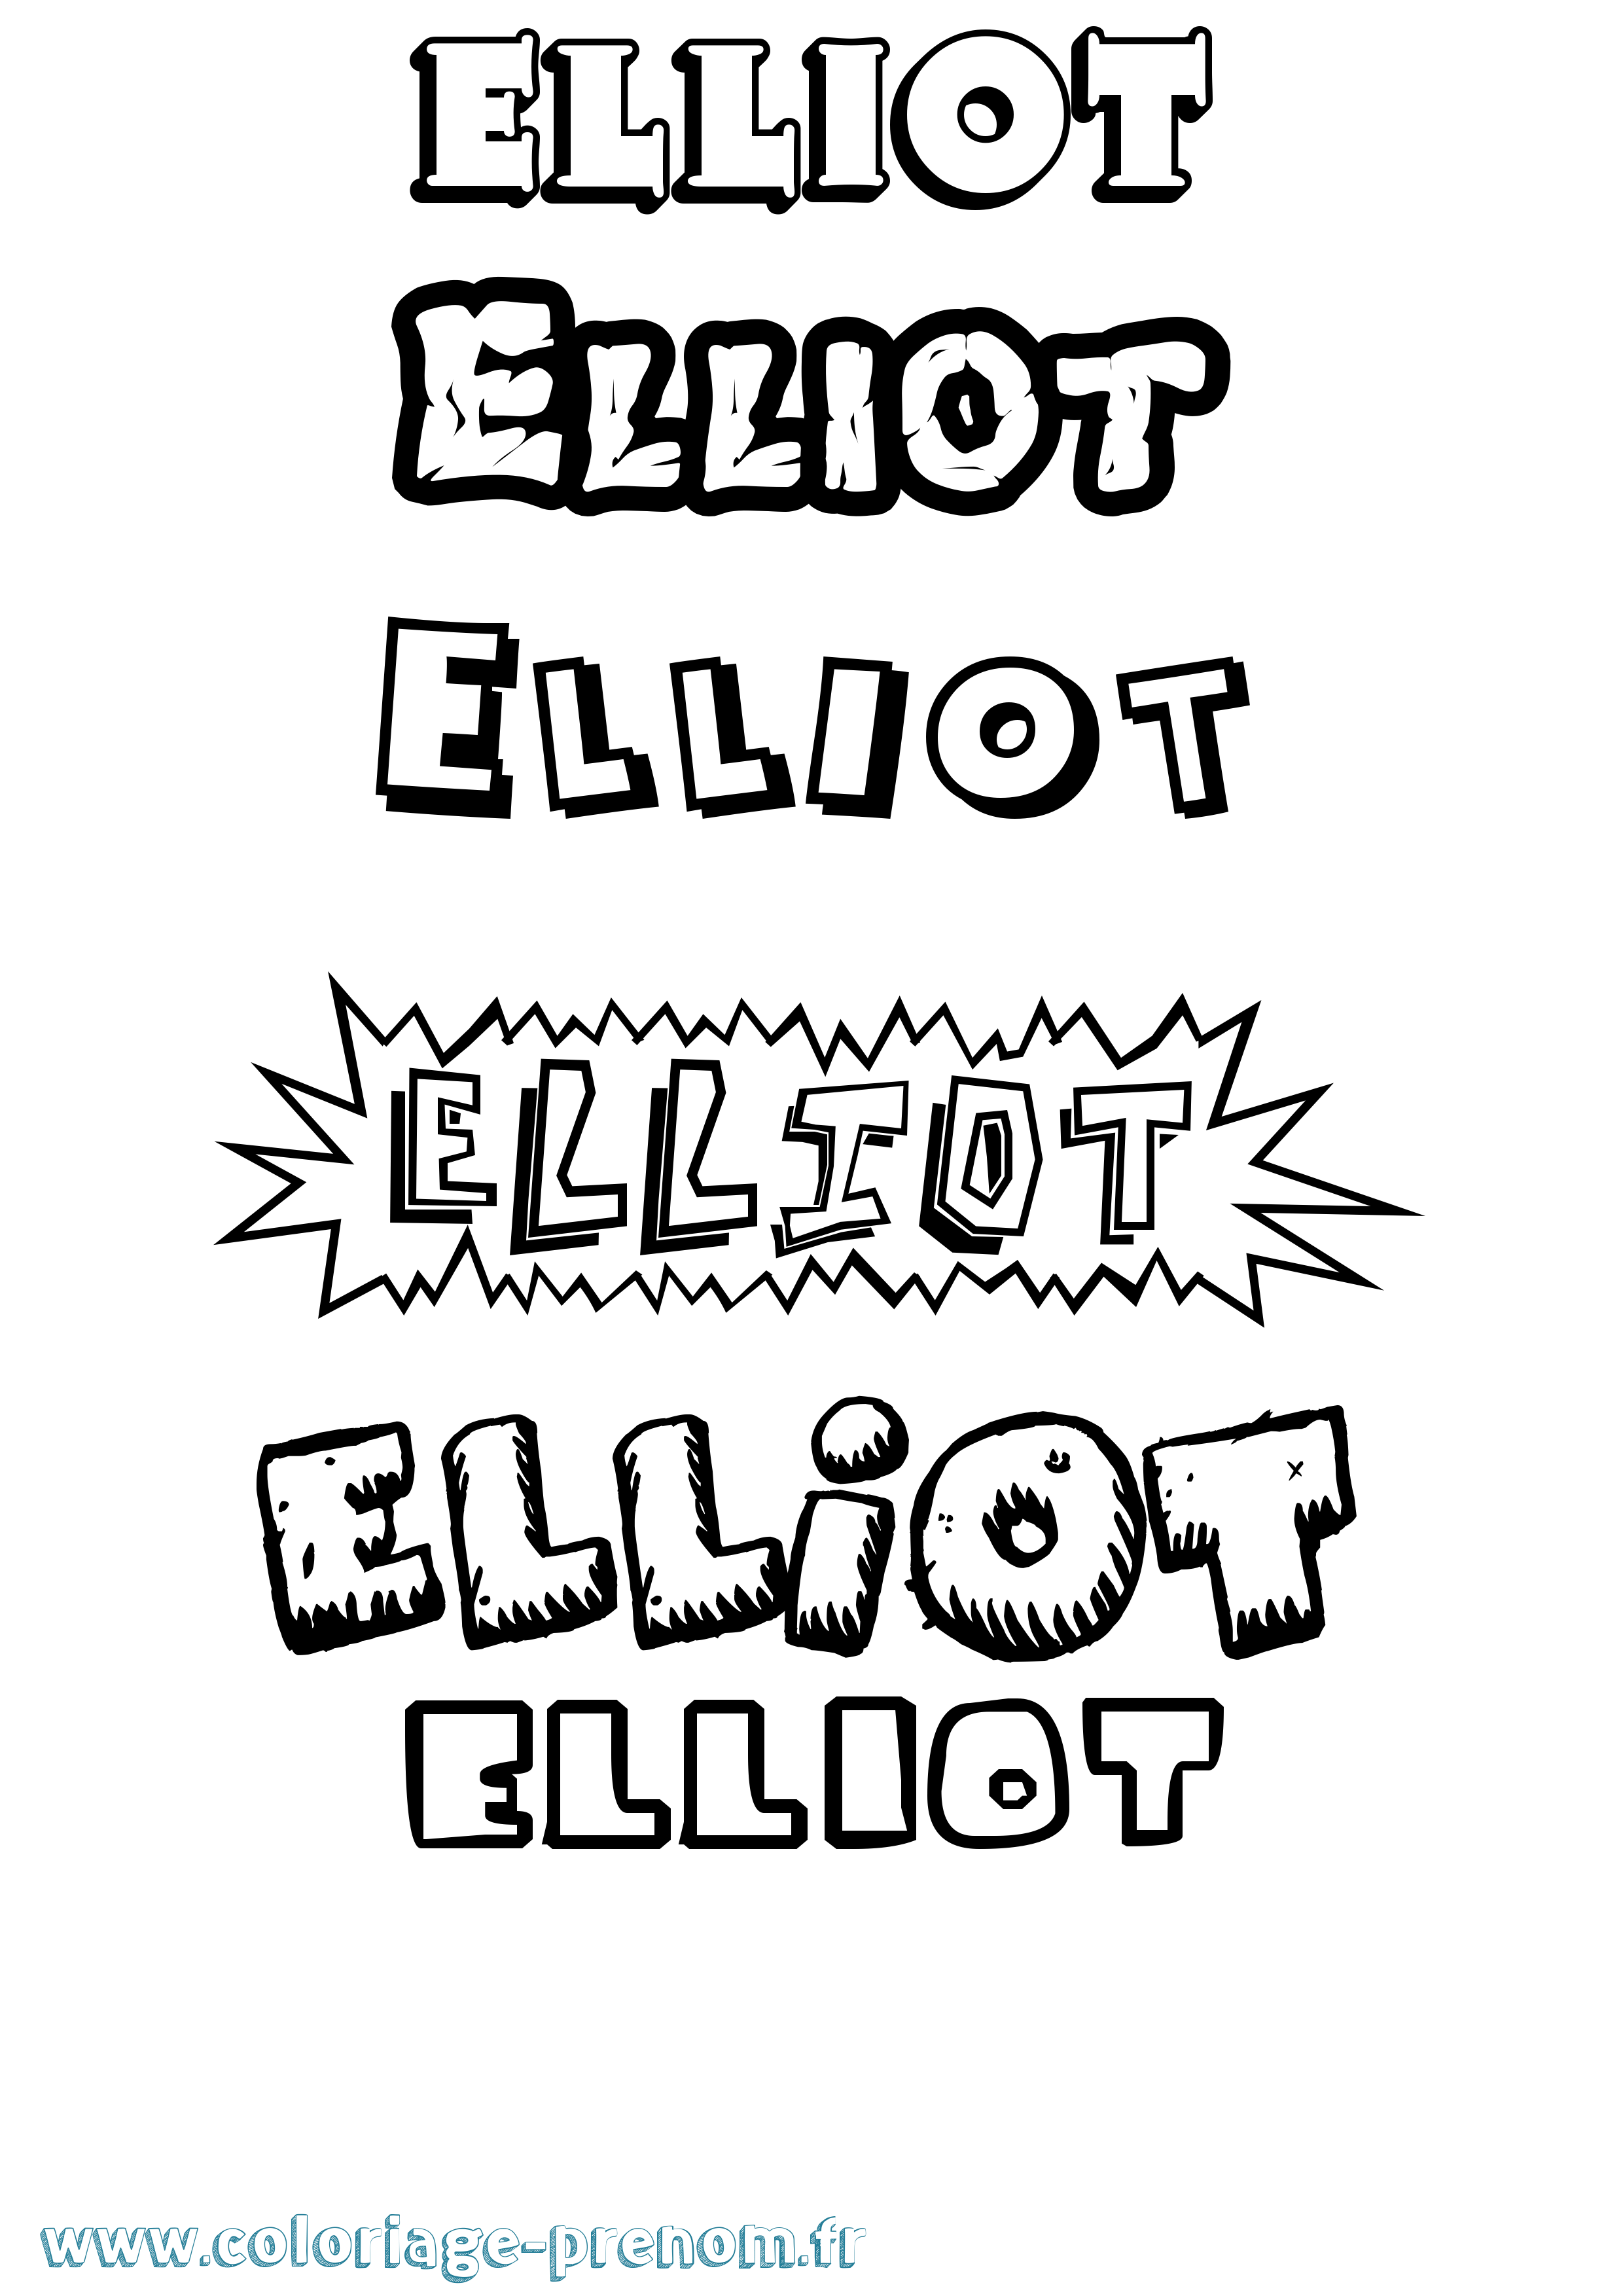 Coloriage prénom Elliot